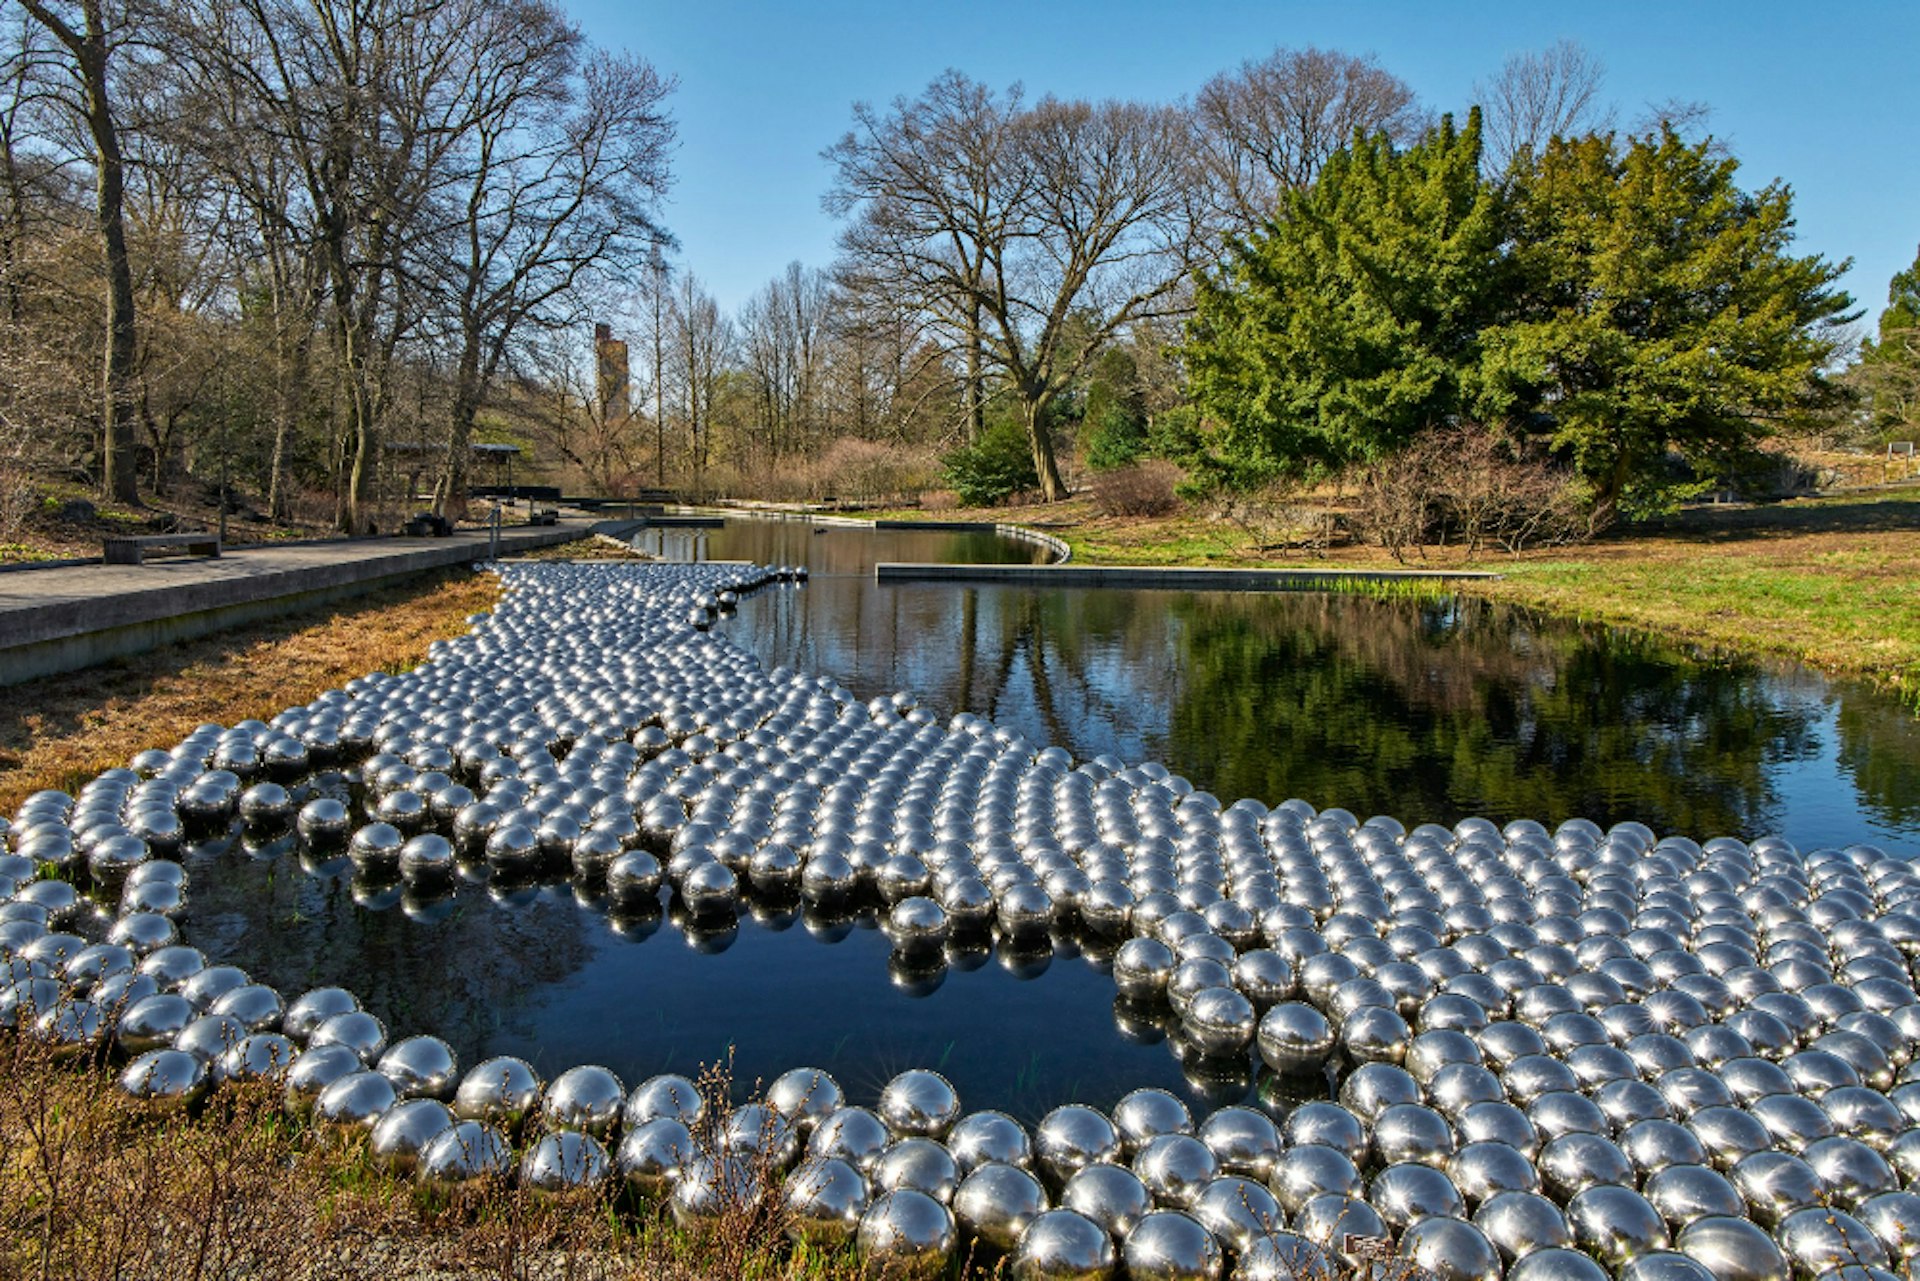 An installation of silver balls in a lake by artist Yayoi Kusama at New York Botanical Garden